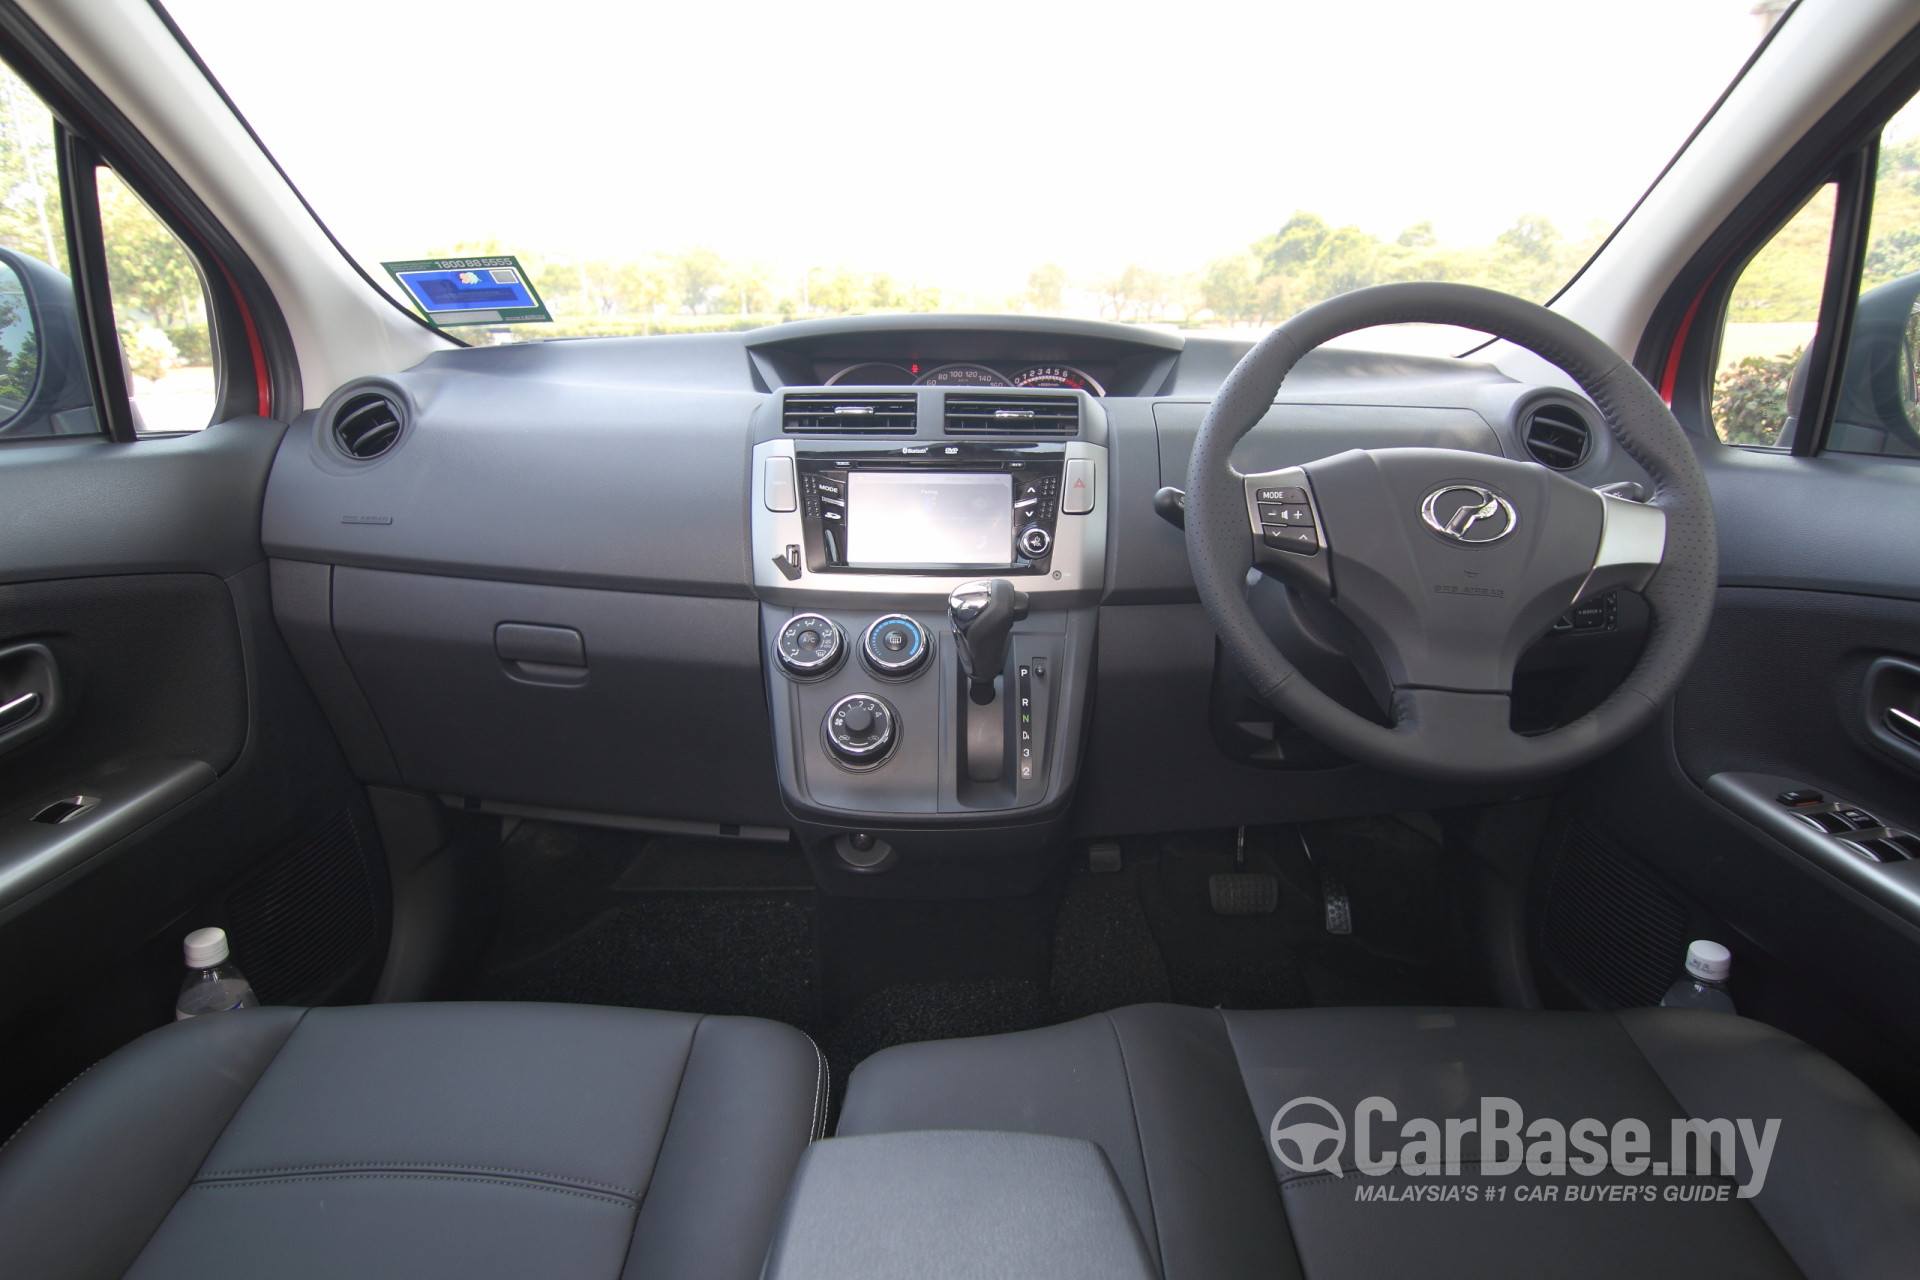 Perodua Alza Mk1 Facelift (2014) Interior Image #8382 in 